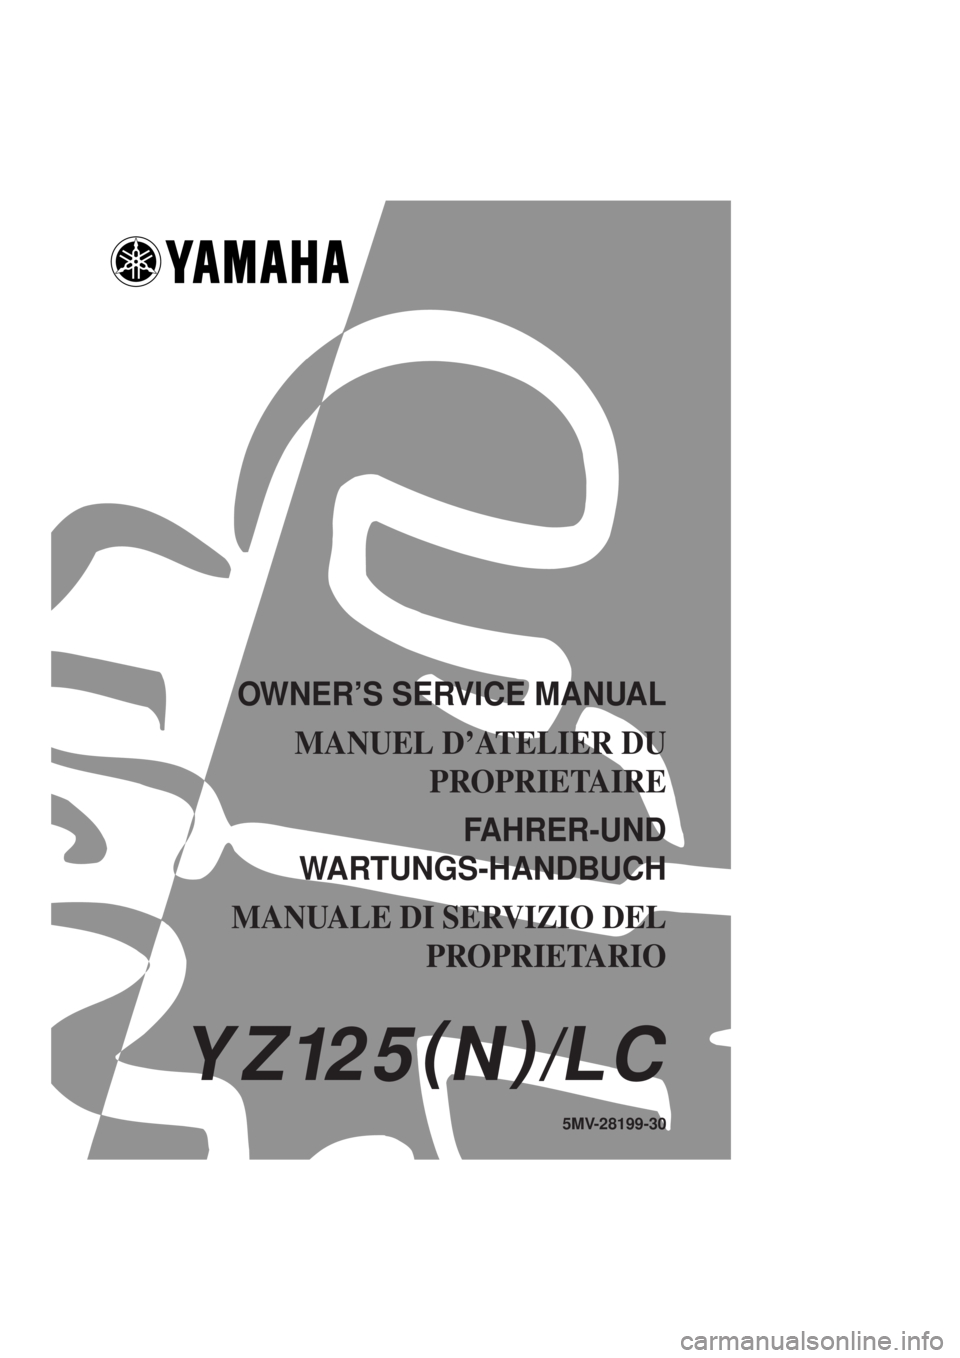 YAMAHA YZ125LC 2001  Manuale duso (in Italian) 5MV-28199-30
OWNER’S SERVICE MANUAL
MANUEL D’ATELIER DU 
PROPRIETAIRE
FAHRER-UND 
WARTUNGS-HANDBUCH
MANUALE DI SERVIZIO DEL
PROPRIETARIO
A4 HYOSHI MASTER H8 JUNE  EDIT. DIV.Y 0
YZ125(
N)
/LC
YZ125